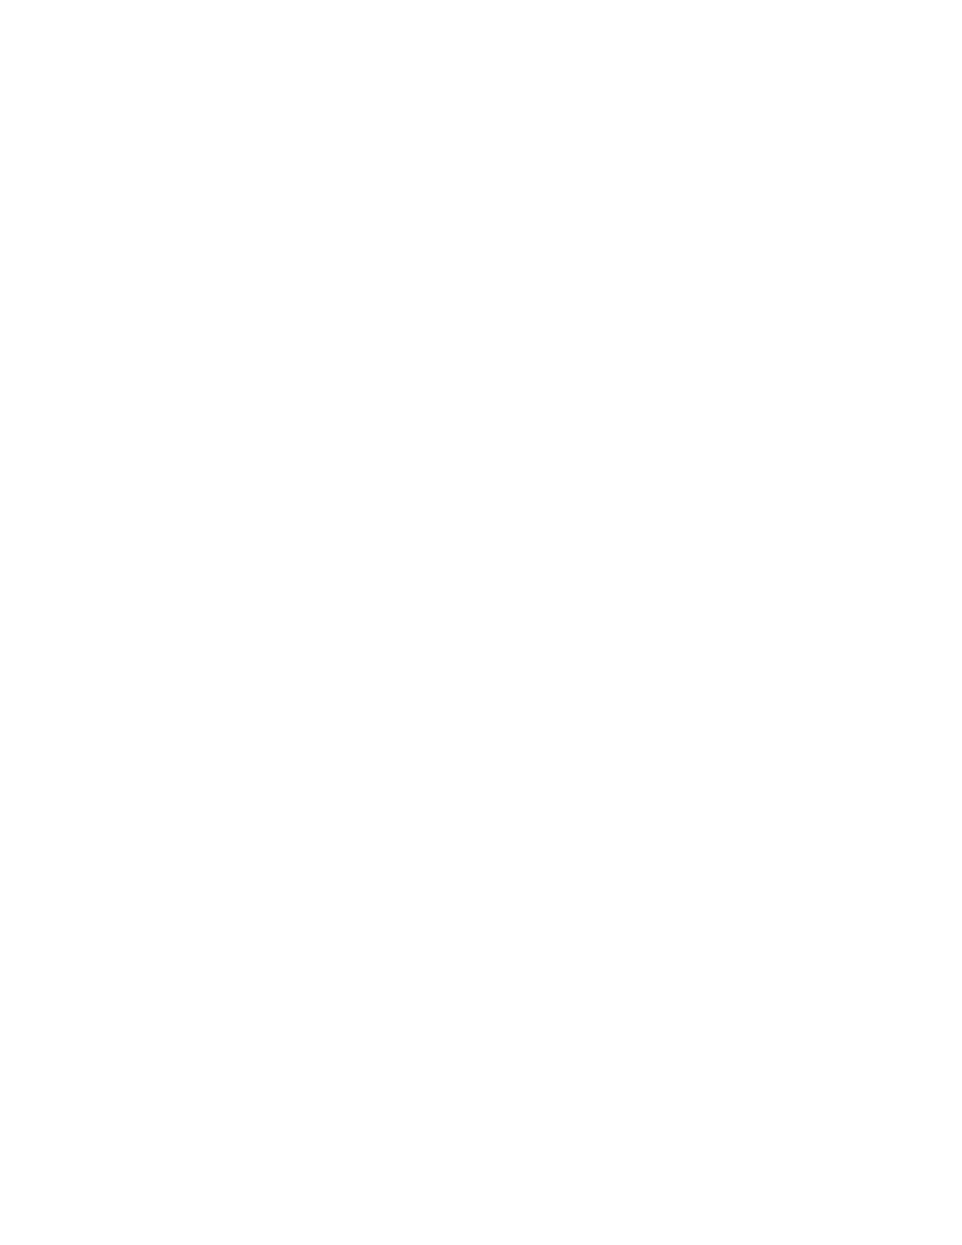 Crown & Anchor Society